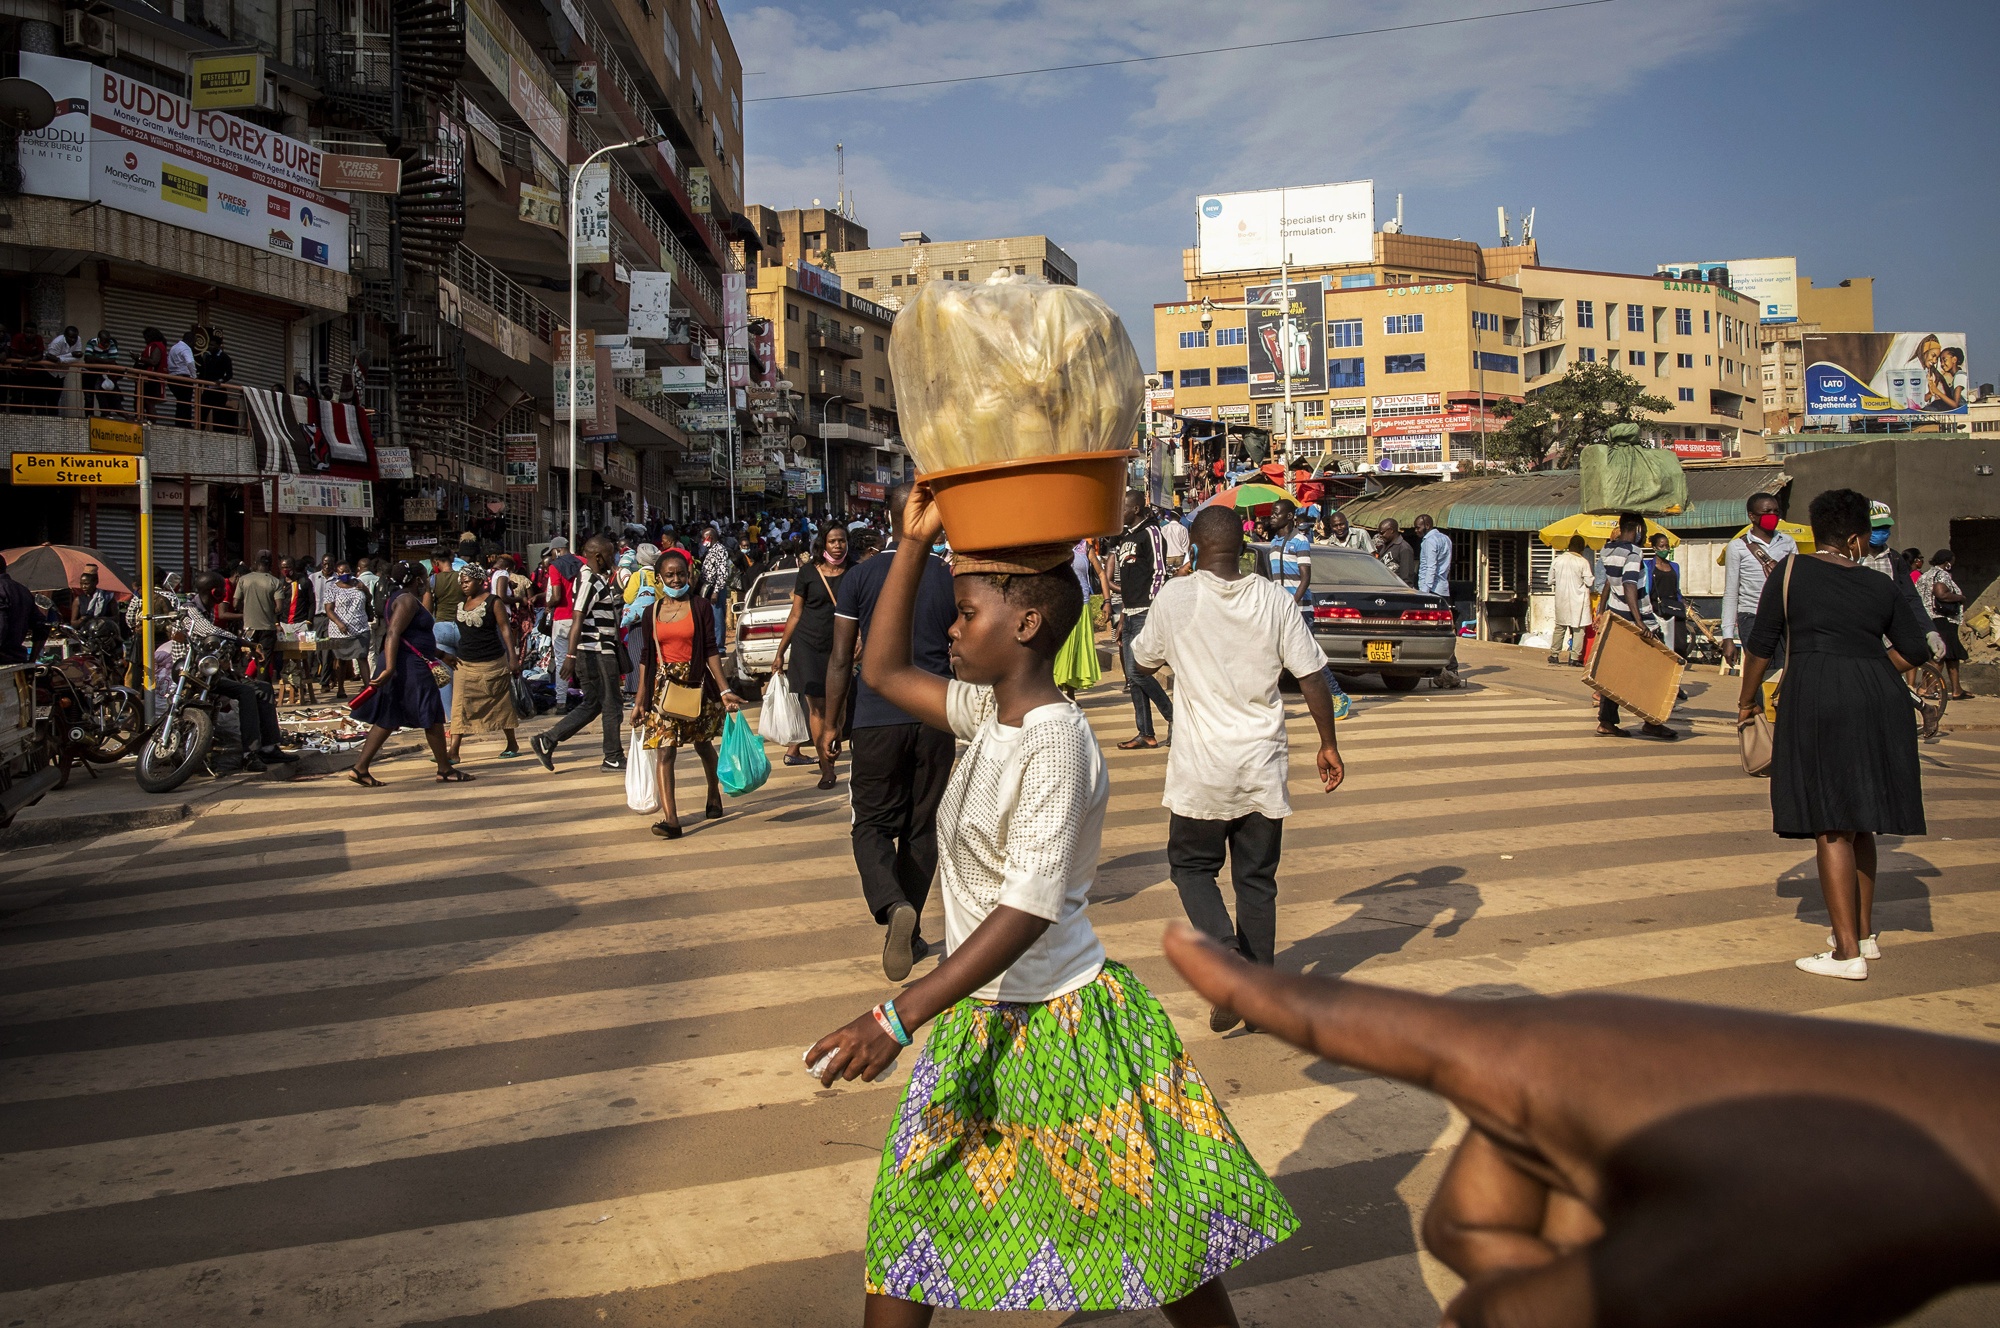 Beyond celebrations: Uganda's minimum wage needs a boost to catch up